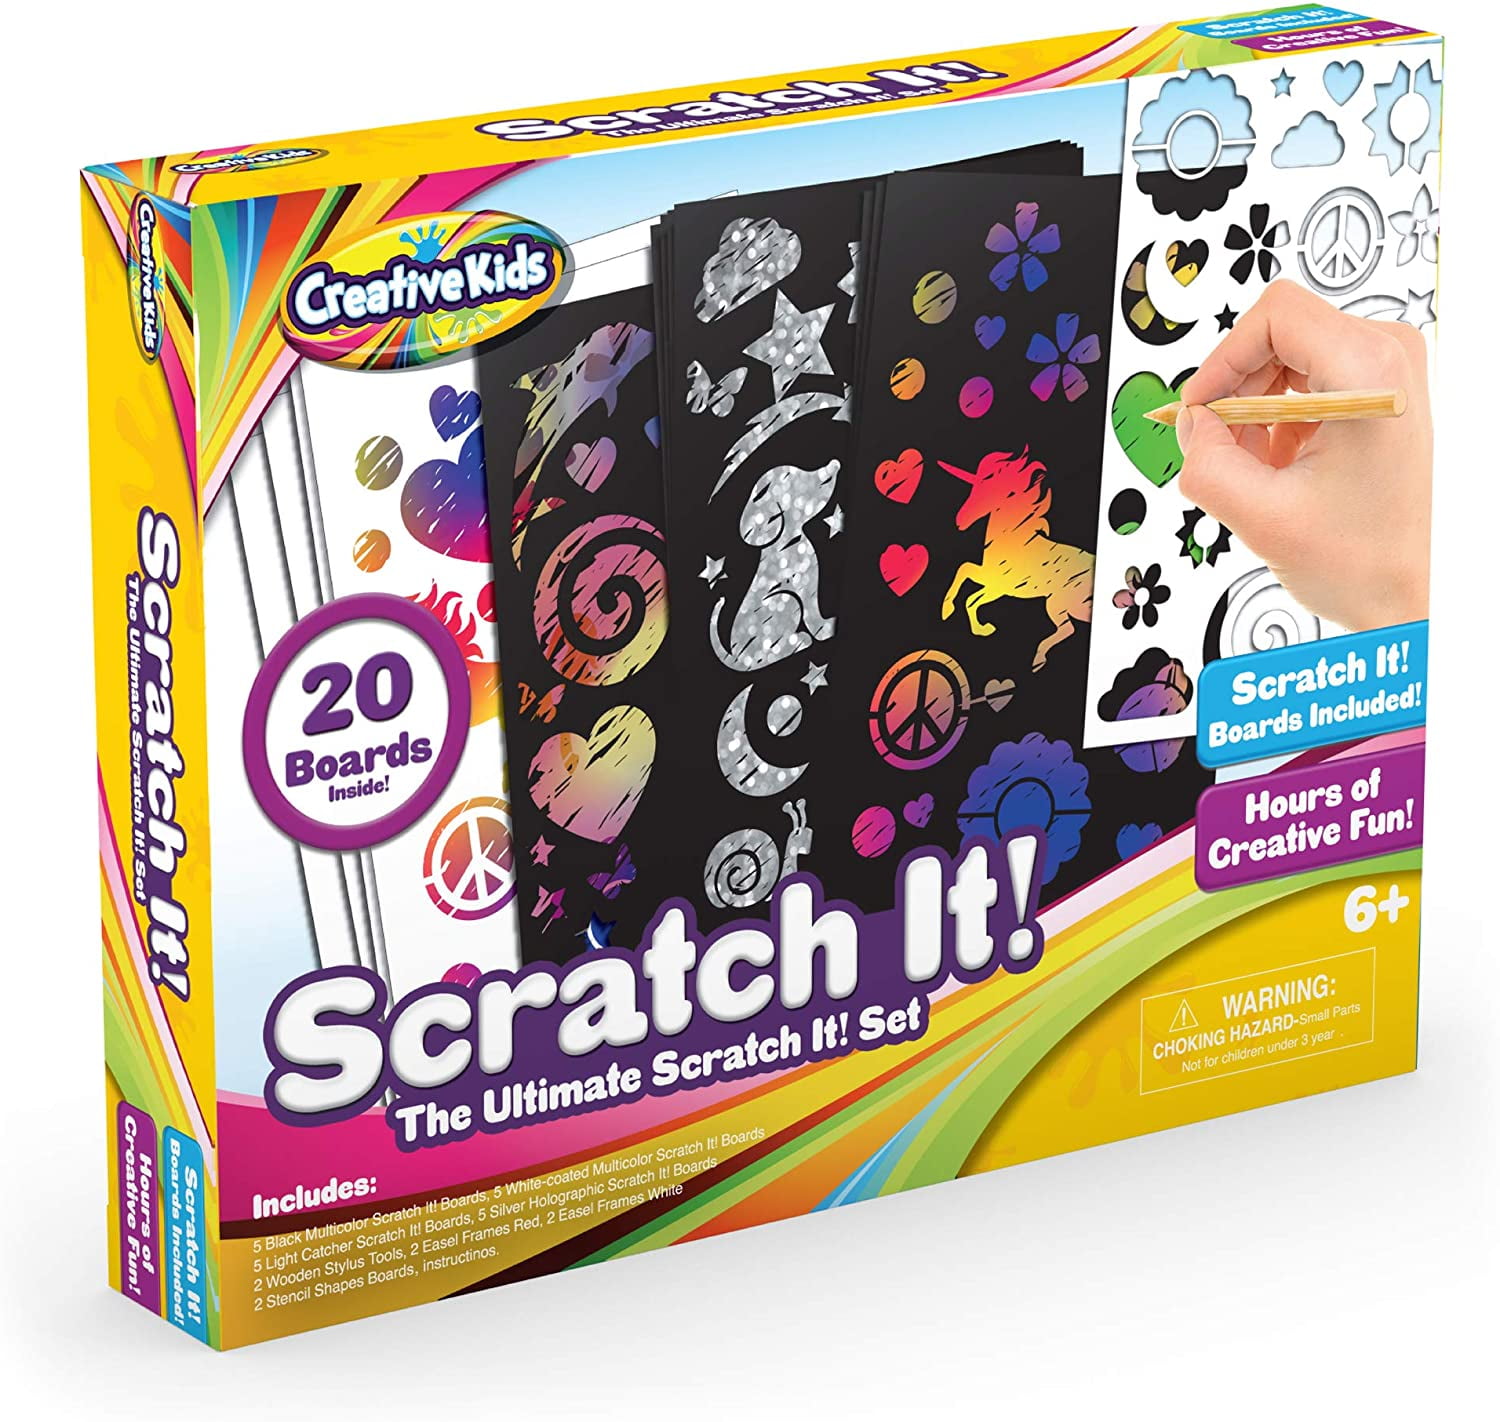 SCRATCH ART SHEETS SET MERMAID HOLOGRAPHIC STENCIL KIDS CRAFT ART GIFT NEW 